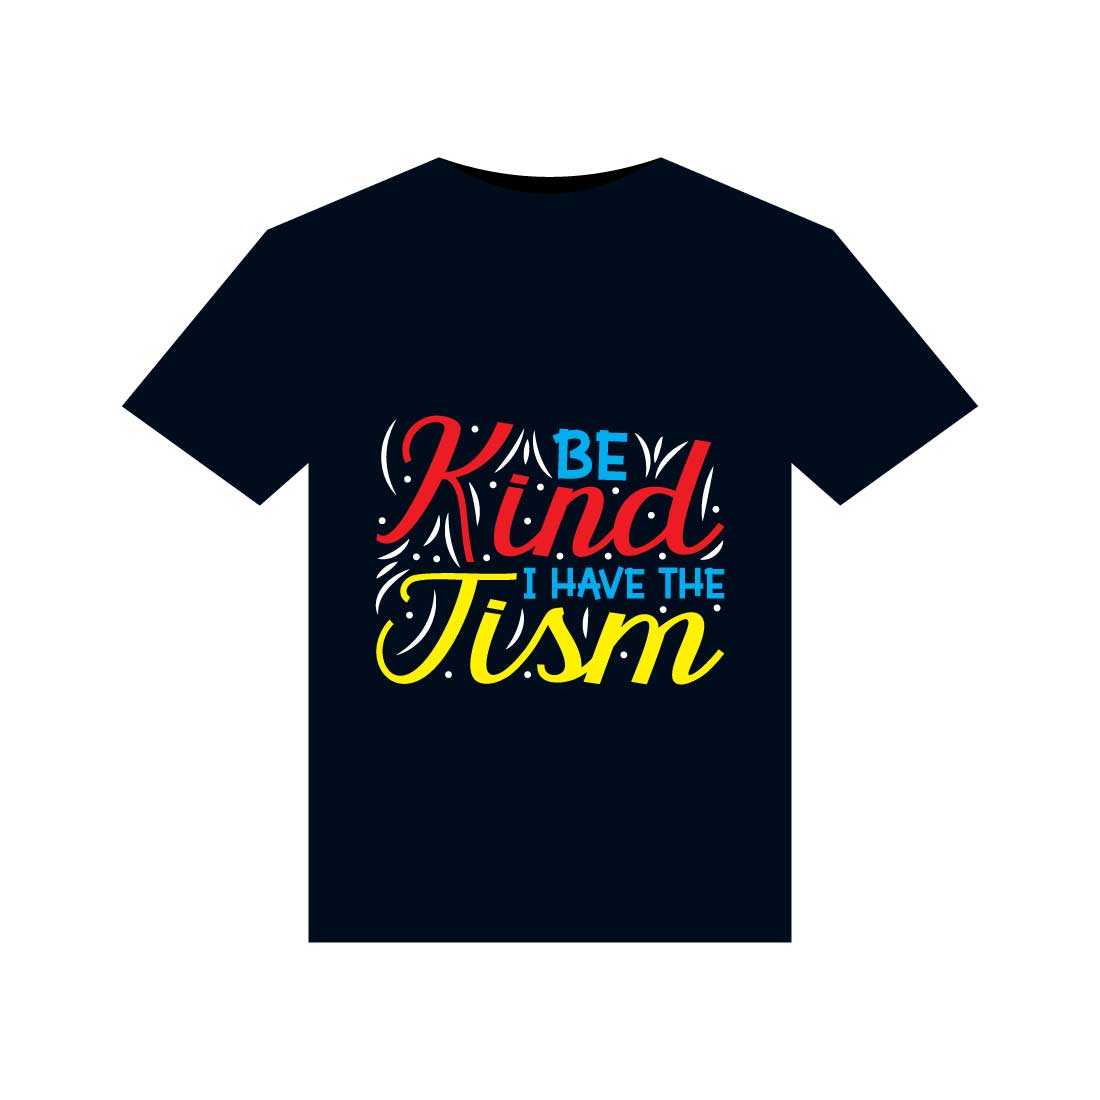 Autism awareness T-Shirts Design preview image.